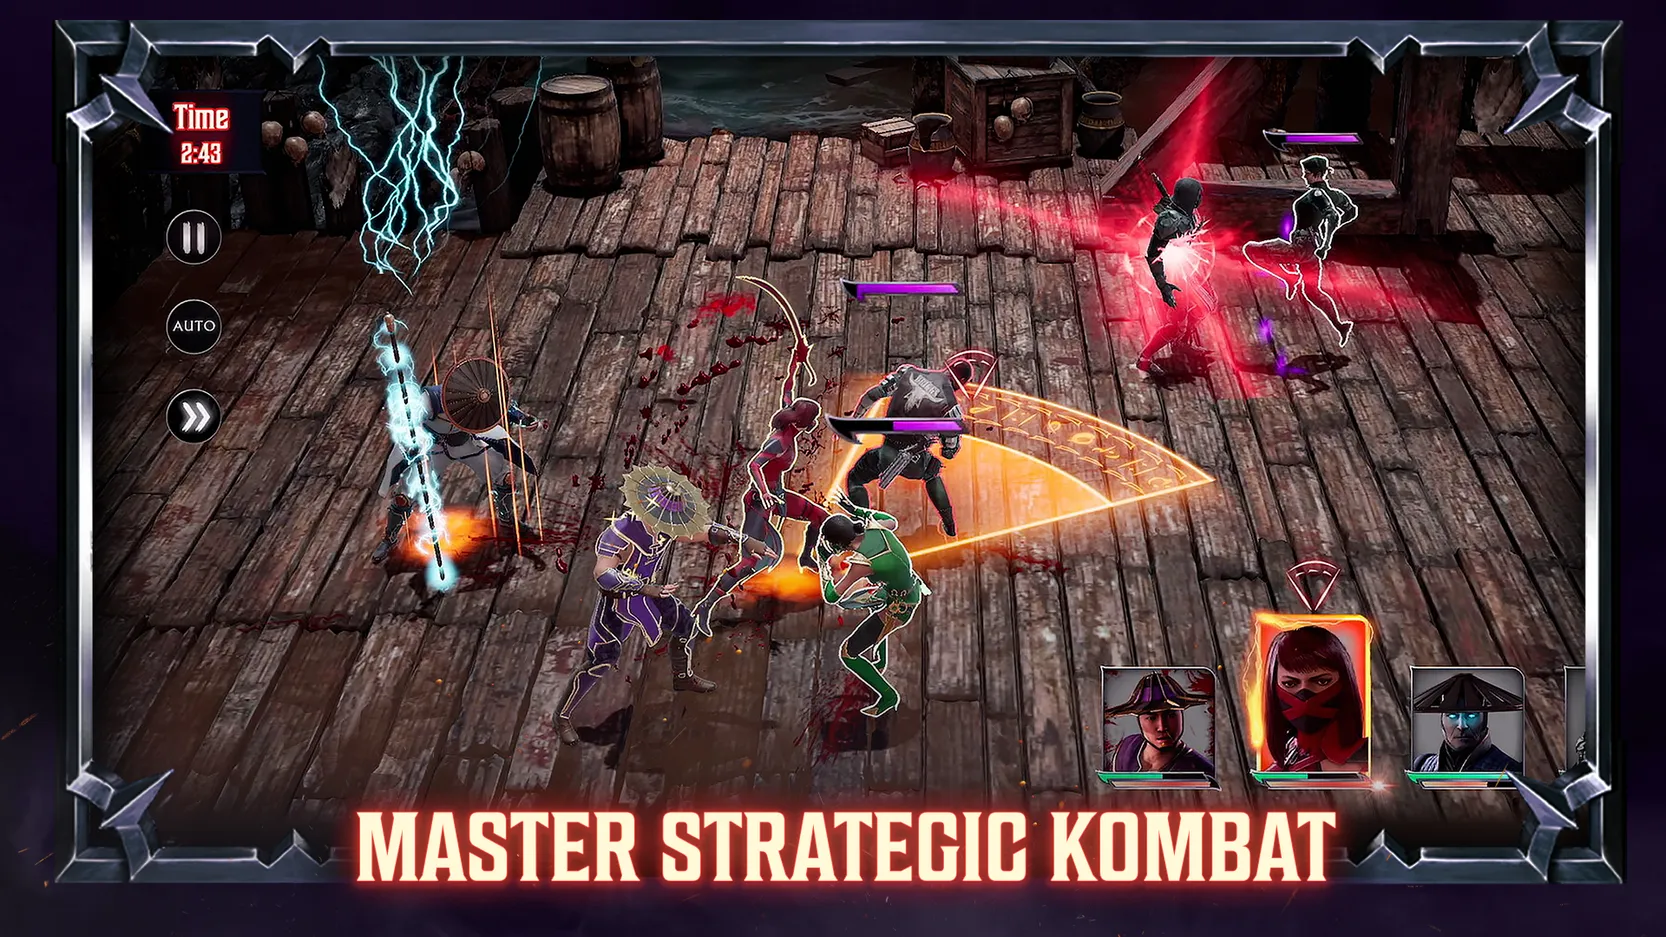 Mortal Kombat: Onslaught APK MOD 1.1.0 Download for Android